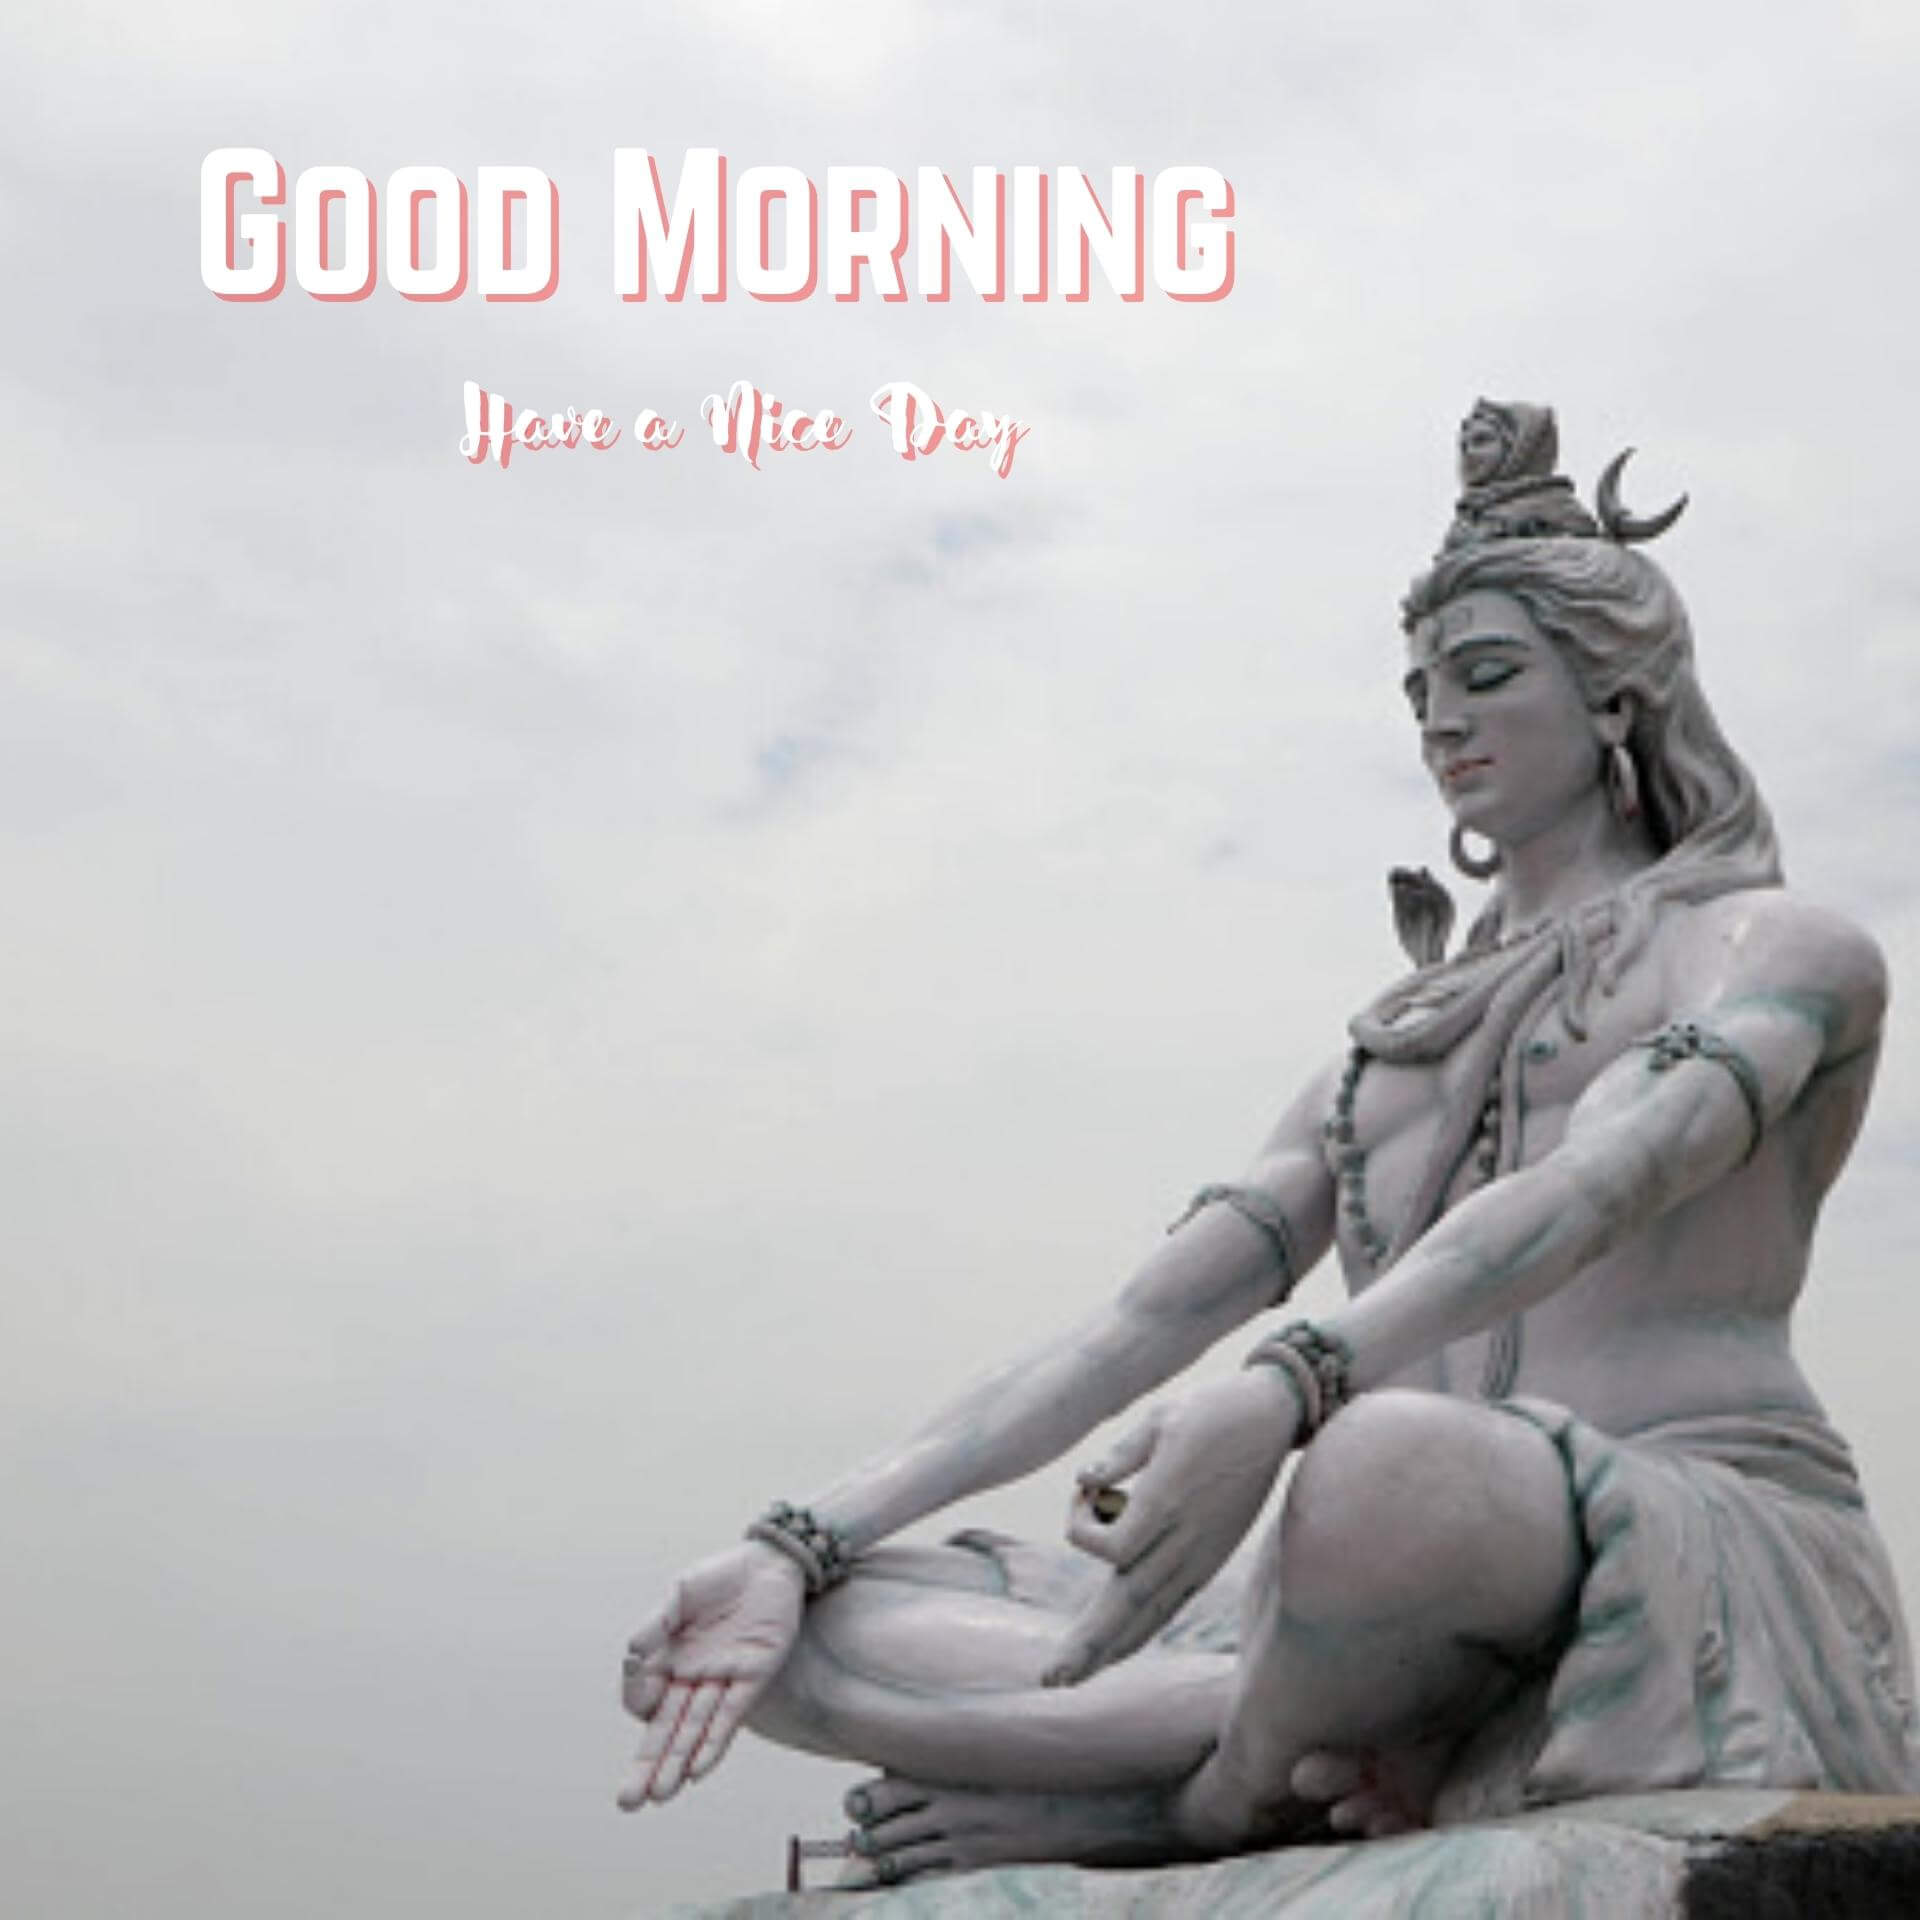 Shiva Good Morning Pics Wallpaper New Download